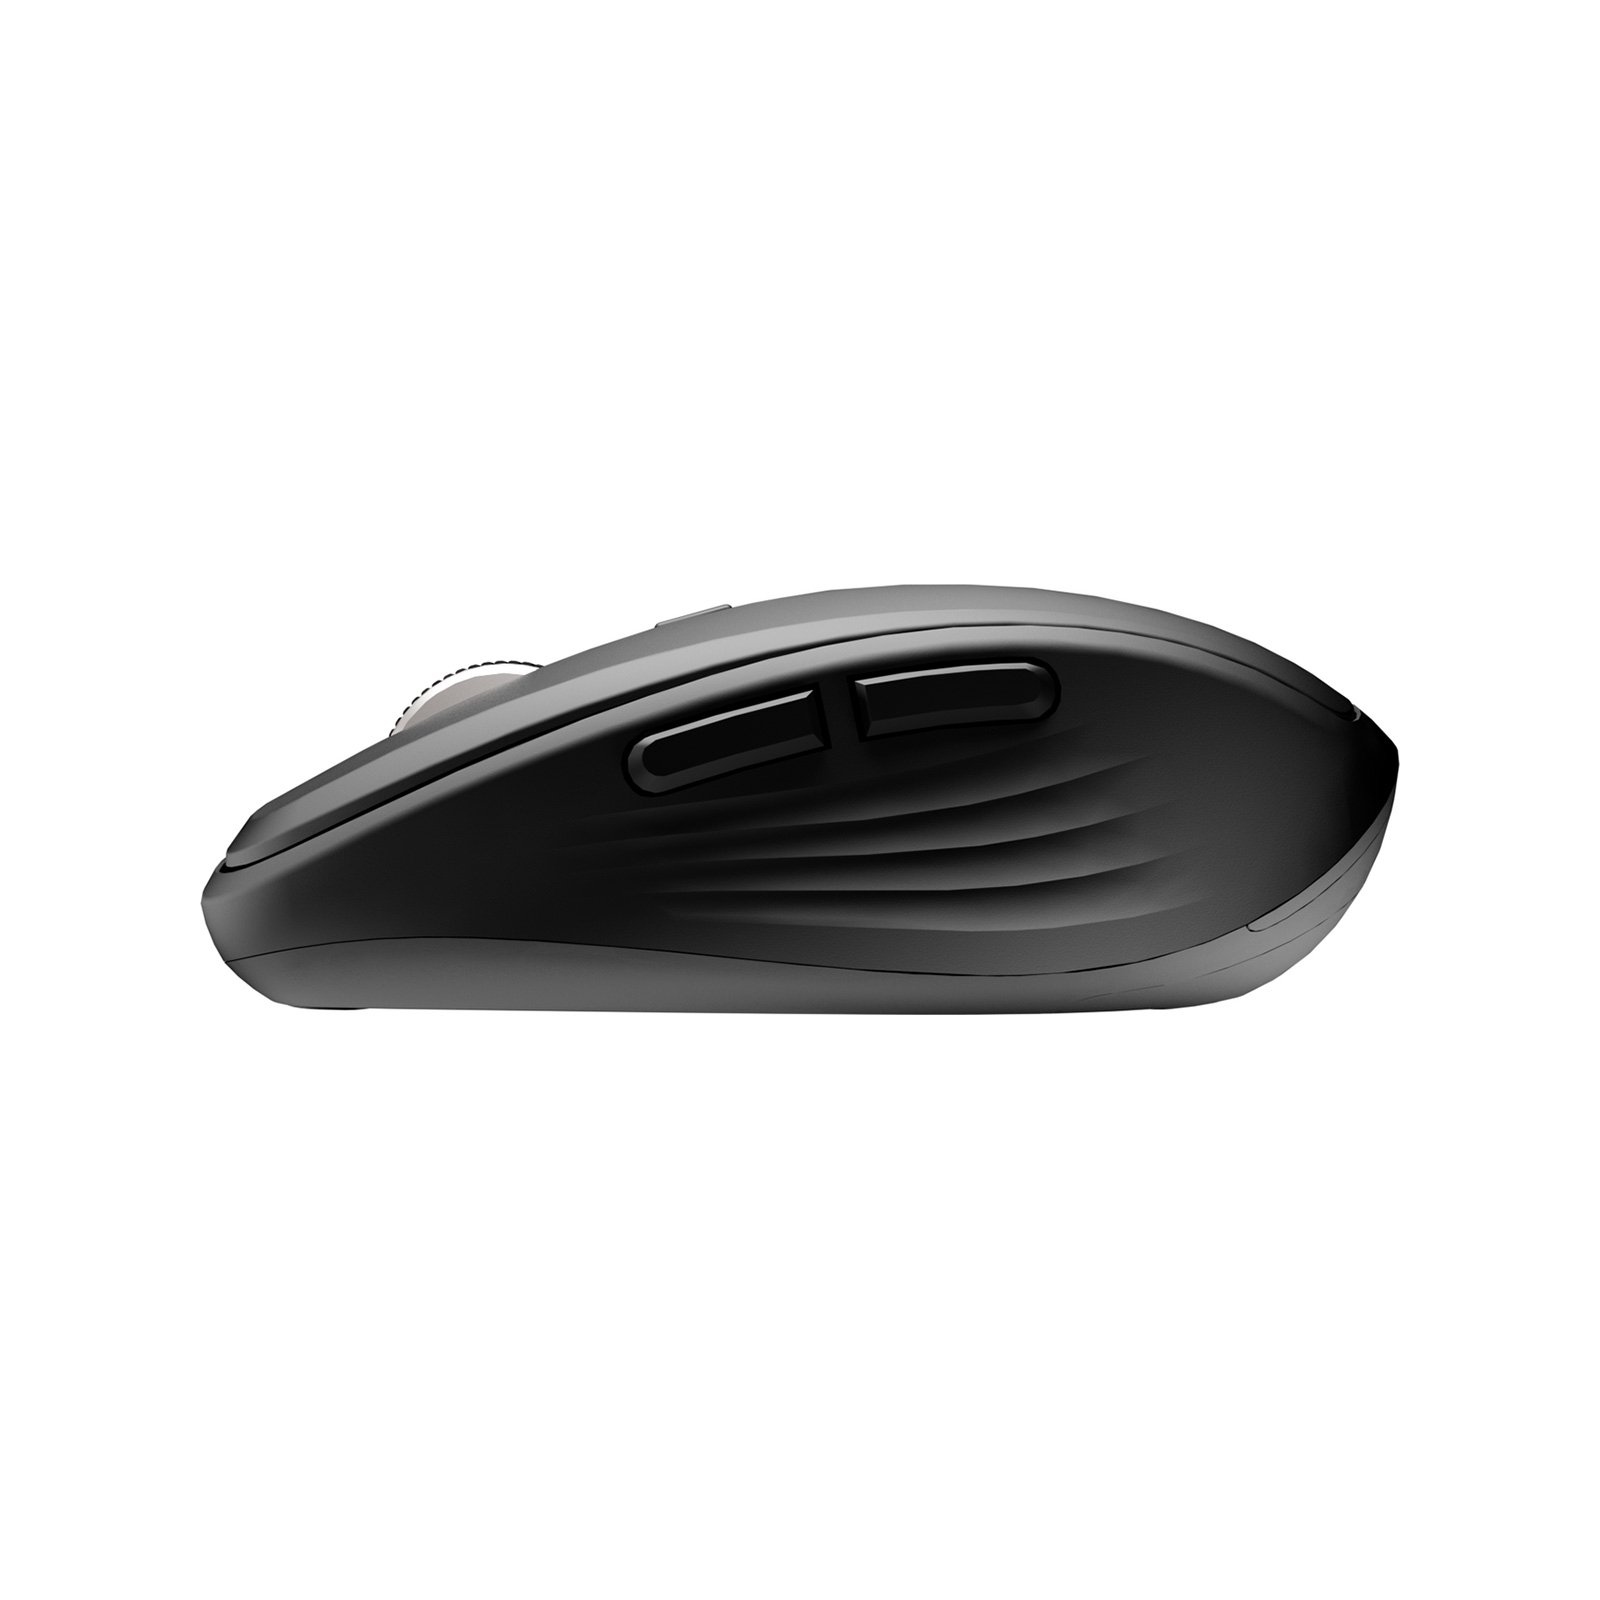 Мишка OfficePro M267G Silent Click Wireless Gray (M267G) зображення 3